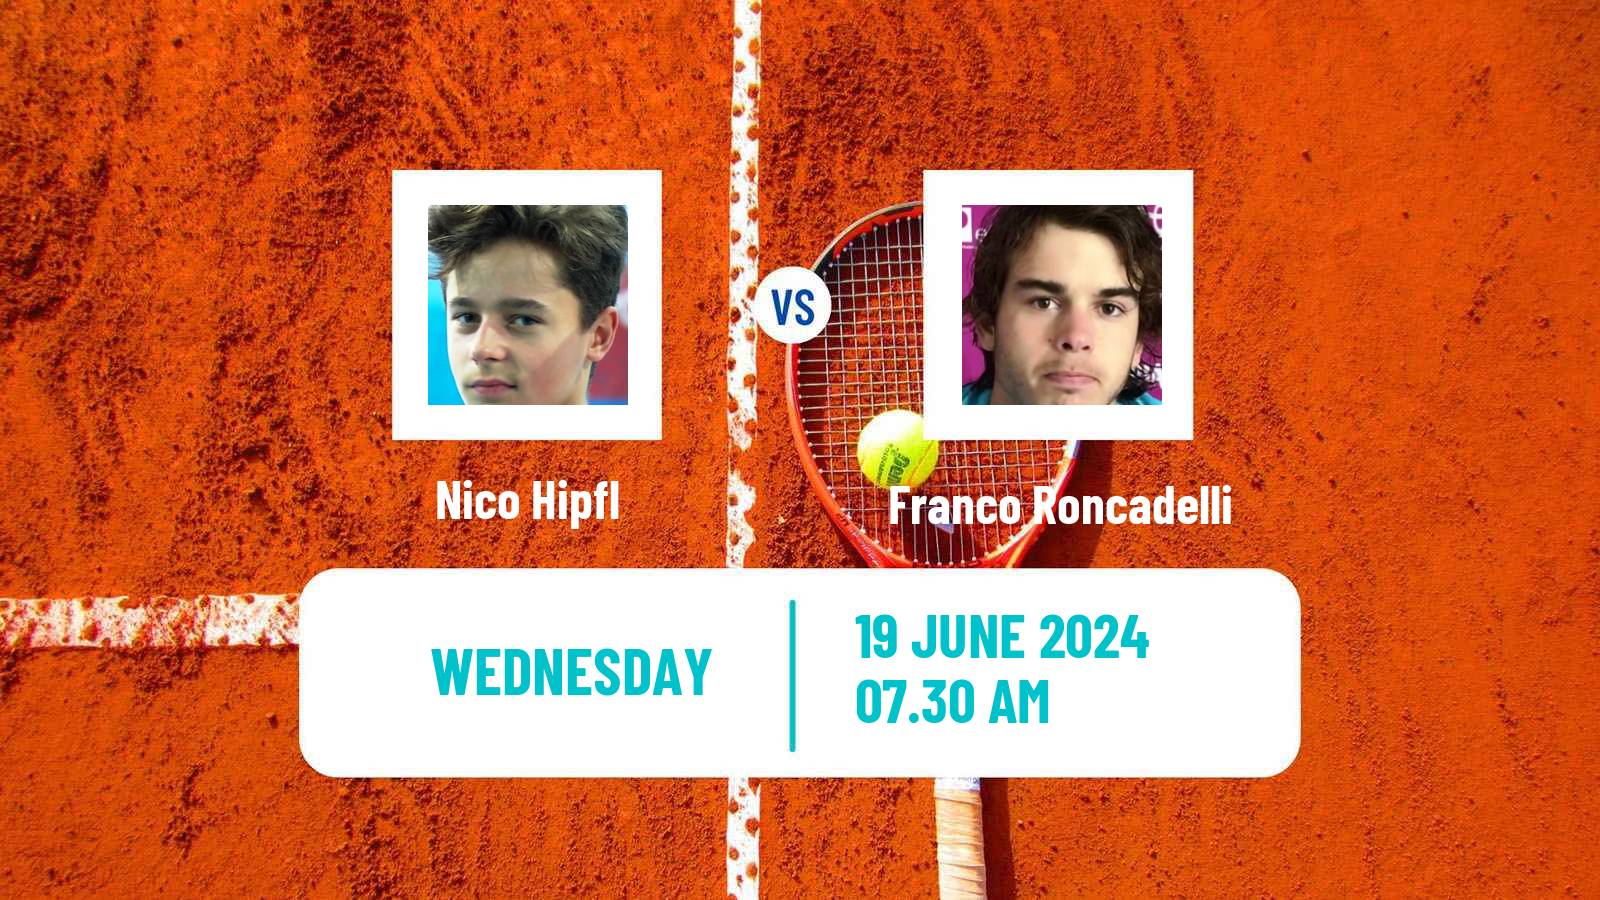 Tennis ITF M15 Nyiregyhaza 2 Men Nico Hipfl - Franco Roncadelli